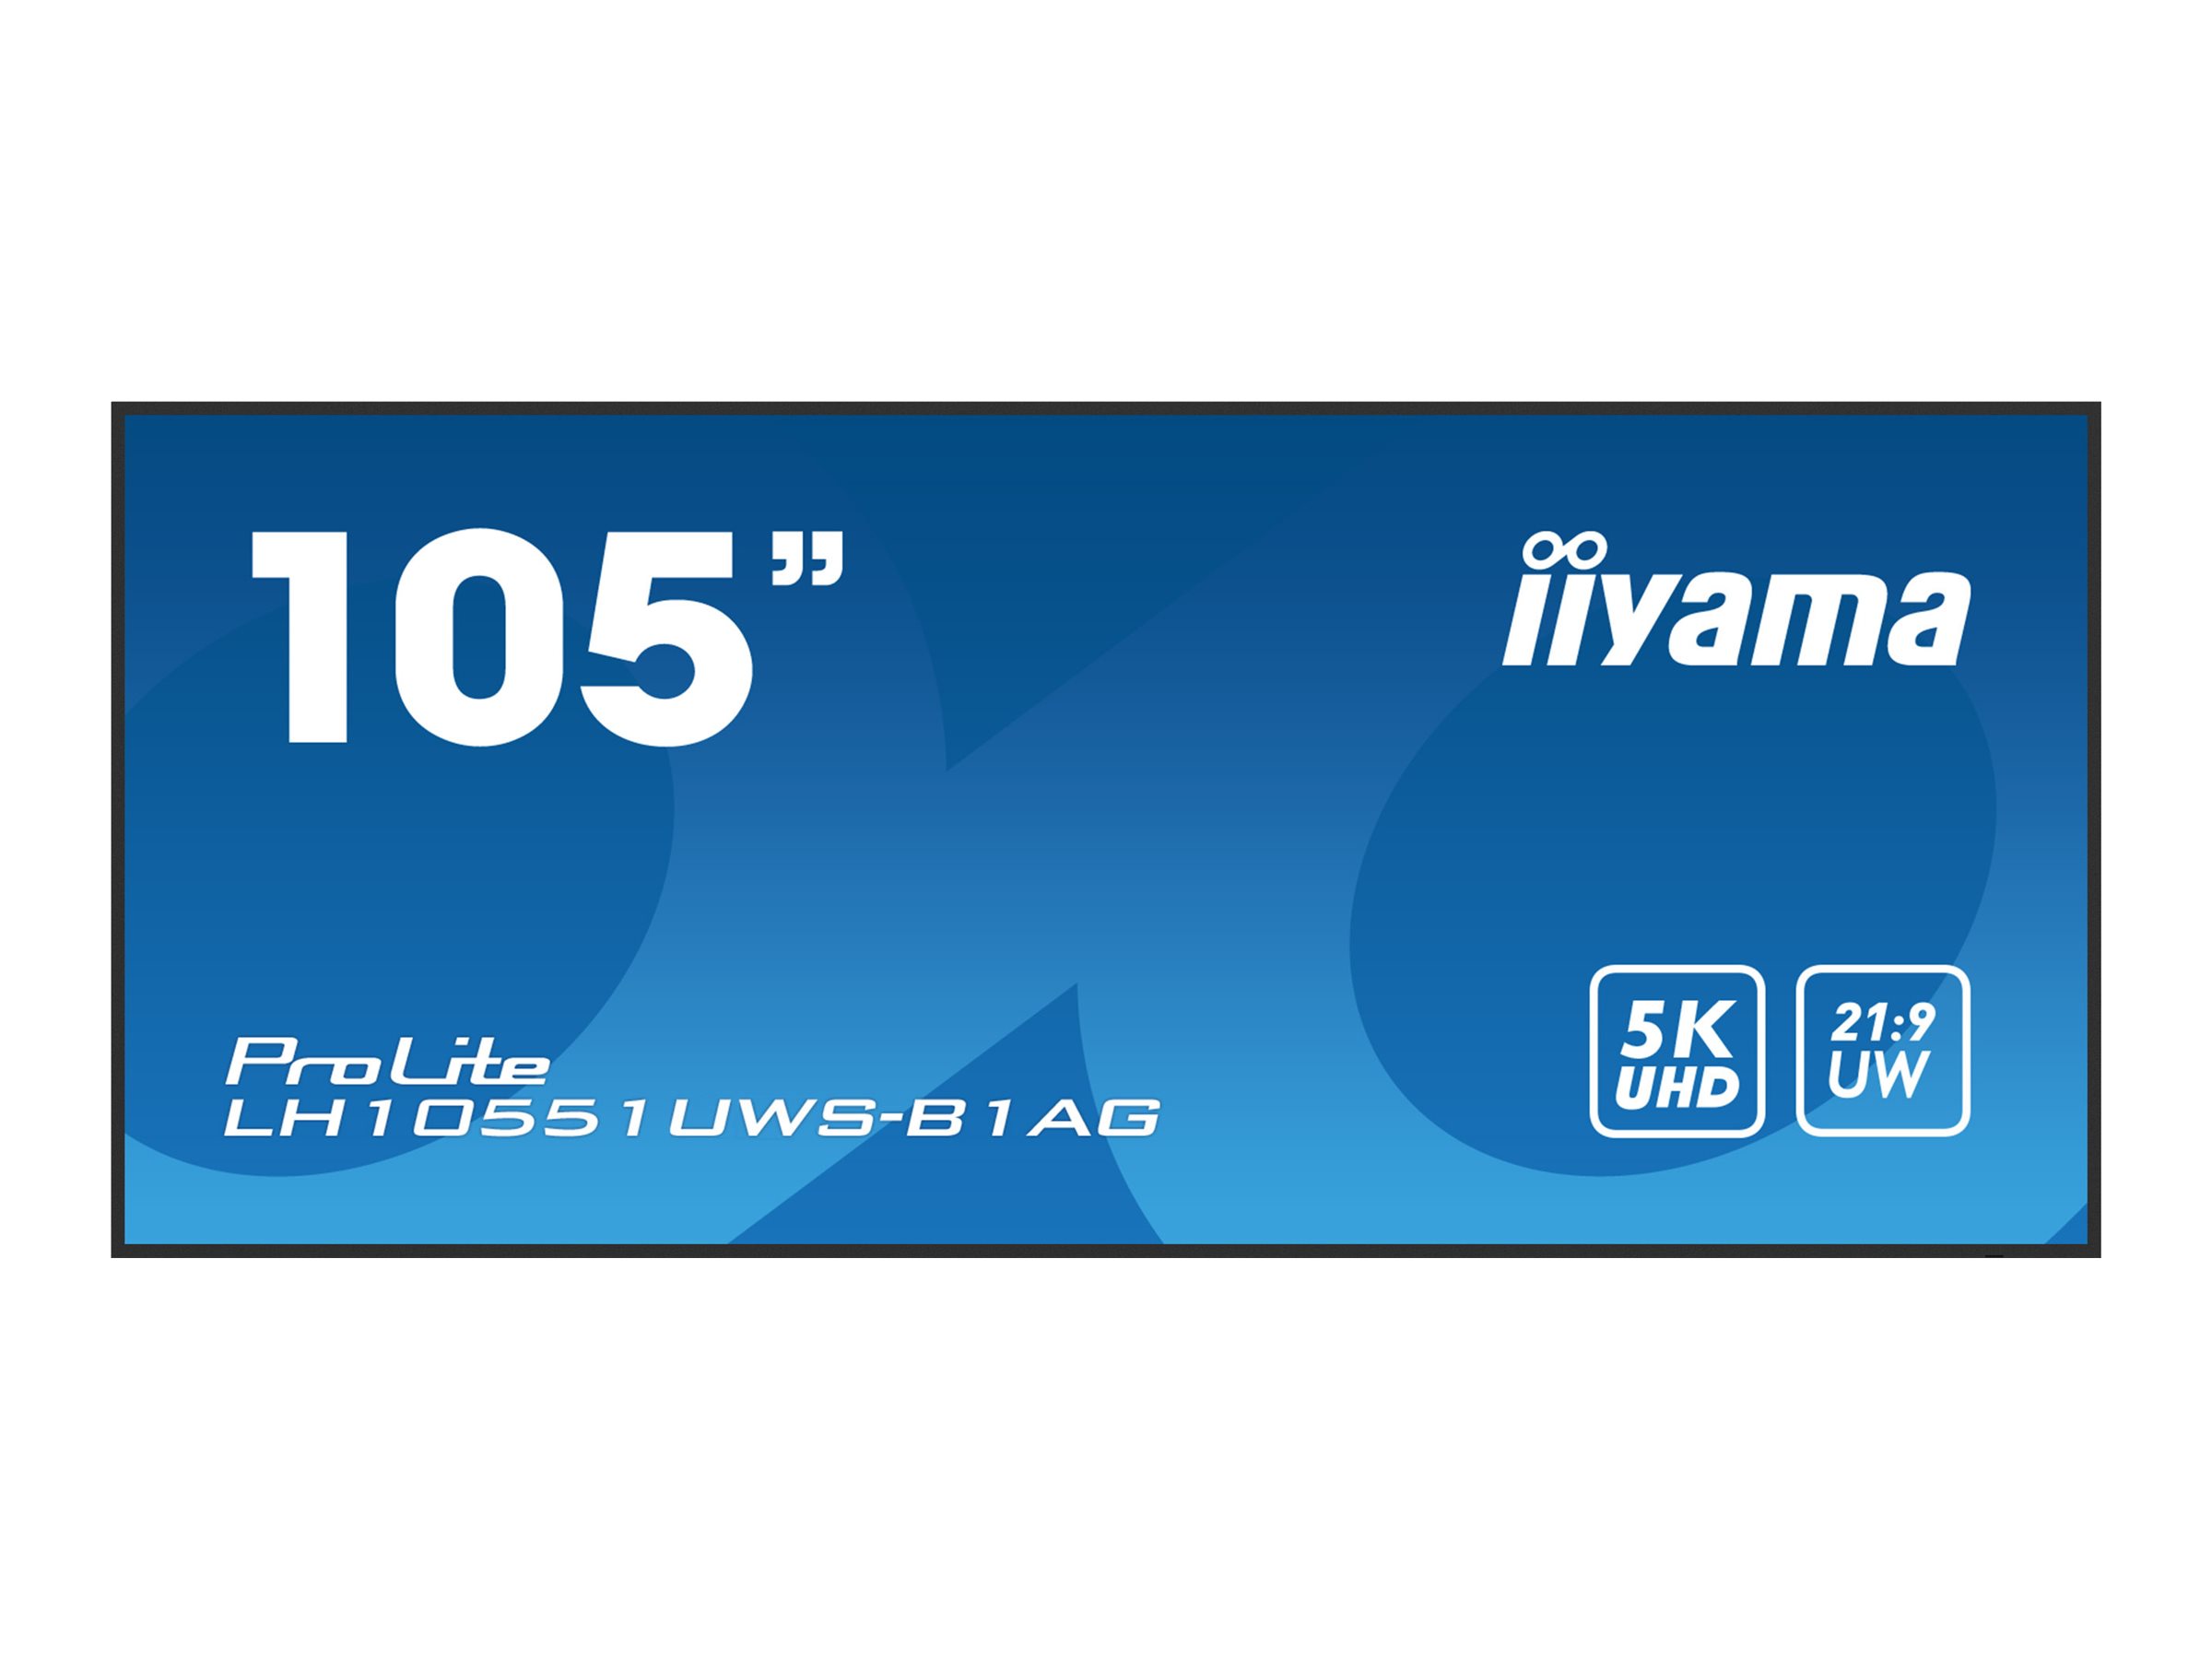 Iiyama ProLite LH10551UWS-B1AG - 267 cm (105")